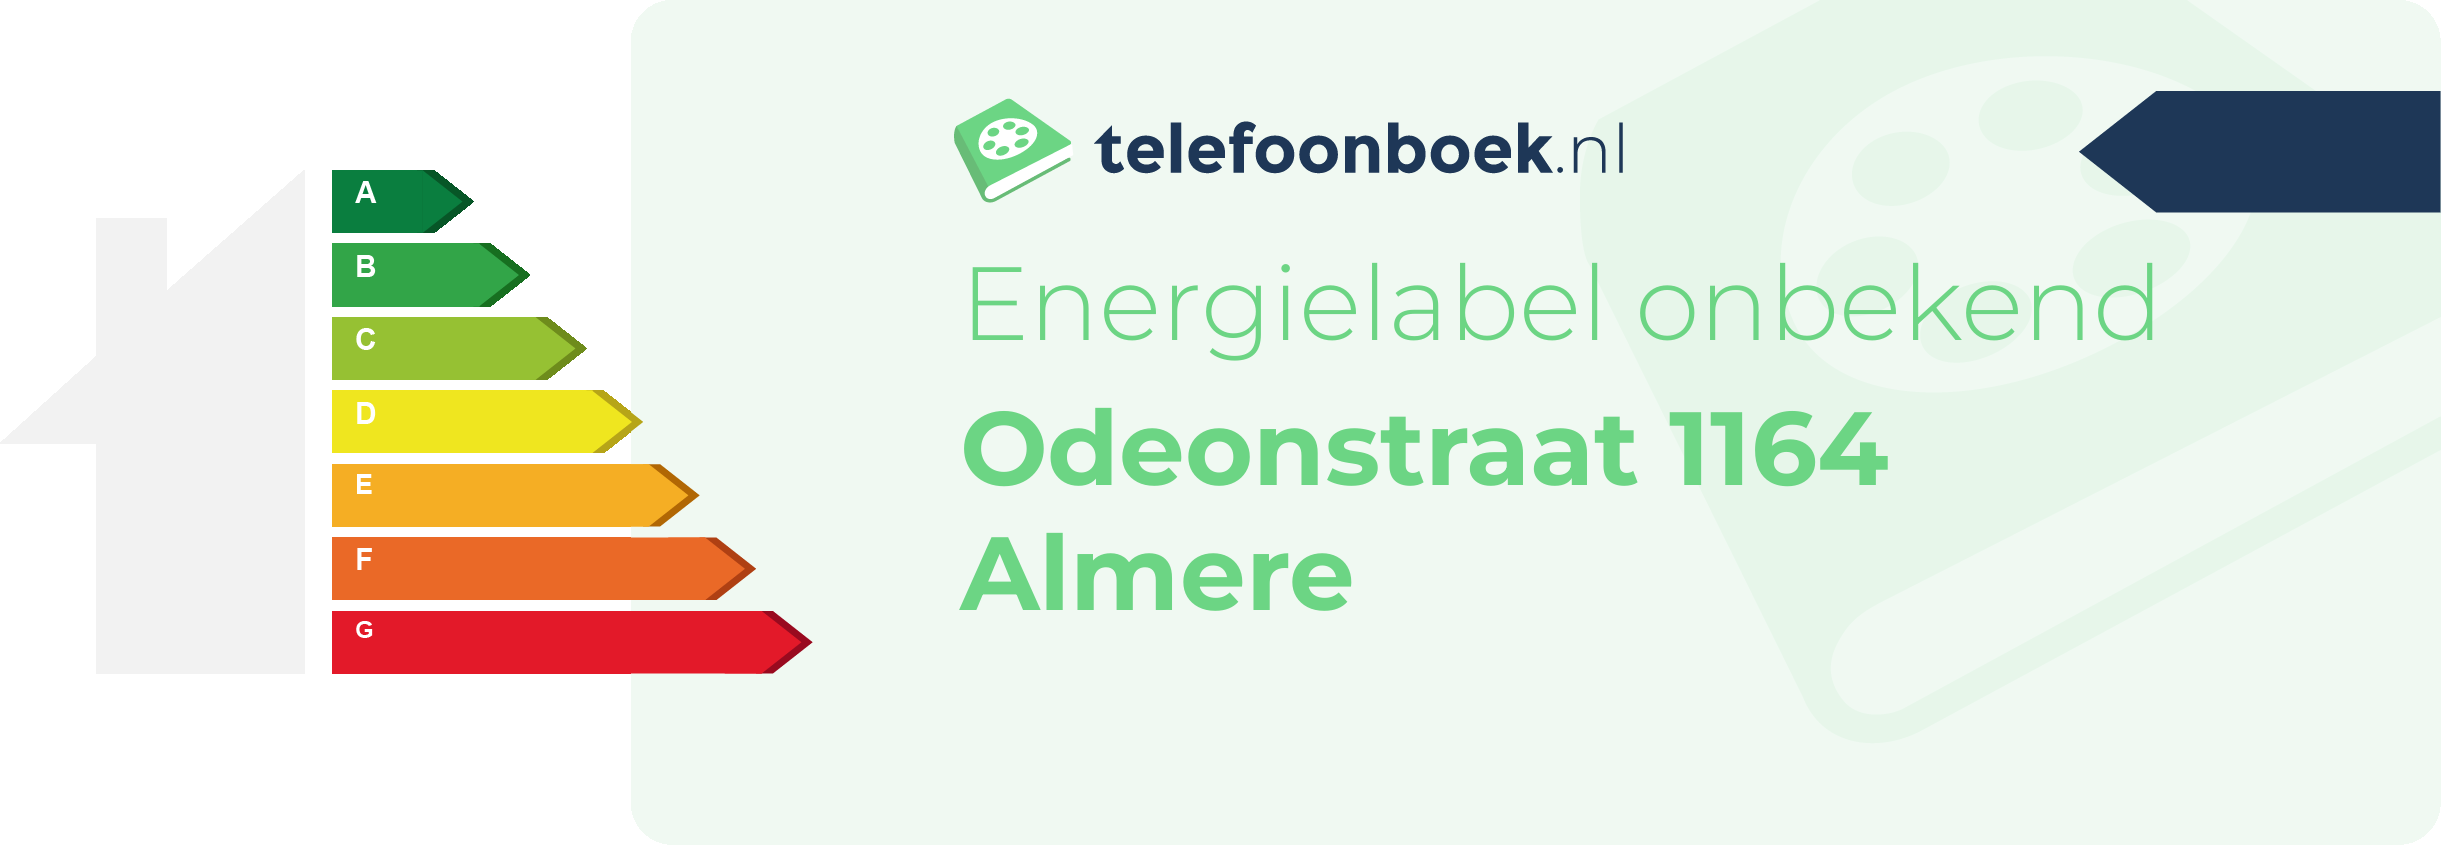 Energielabel Odeonstraat 1164 Almere